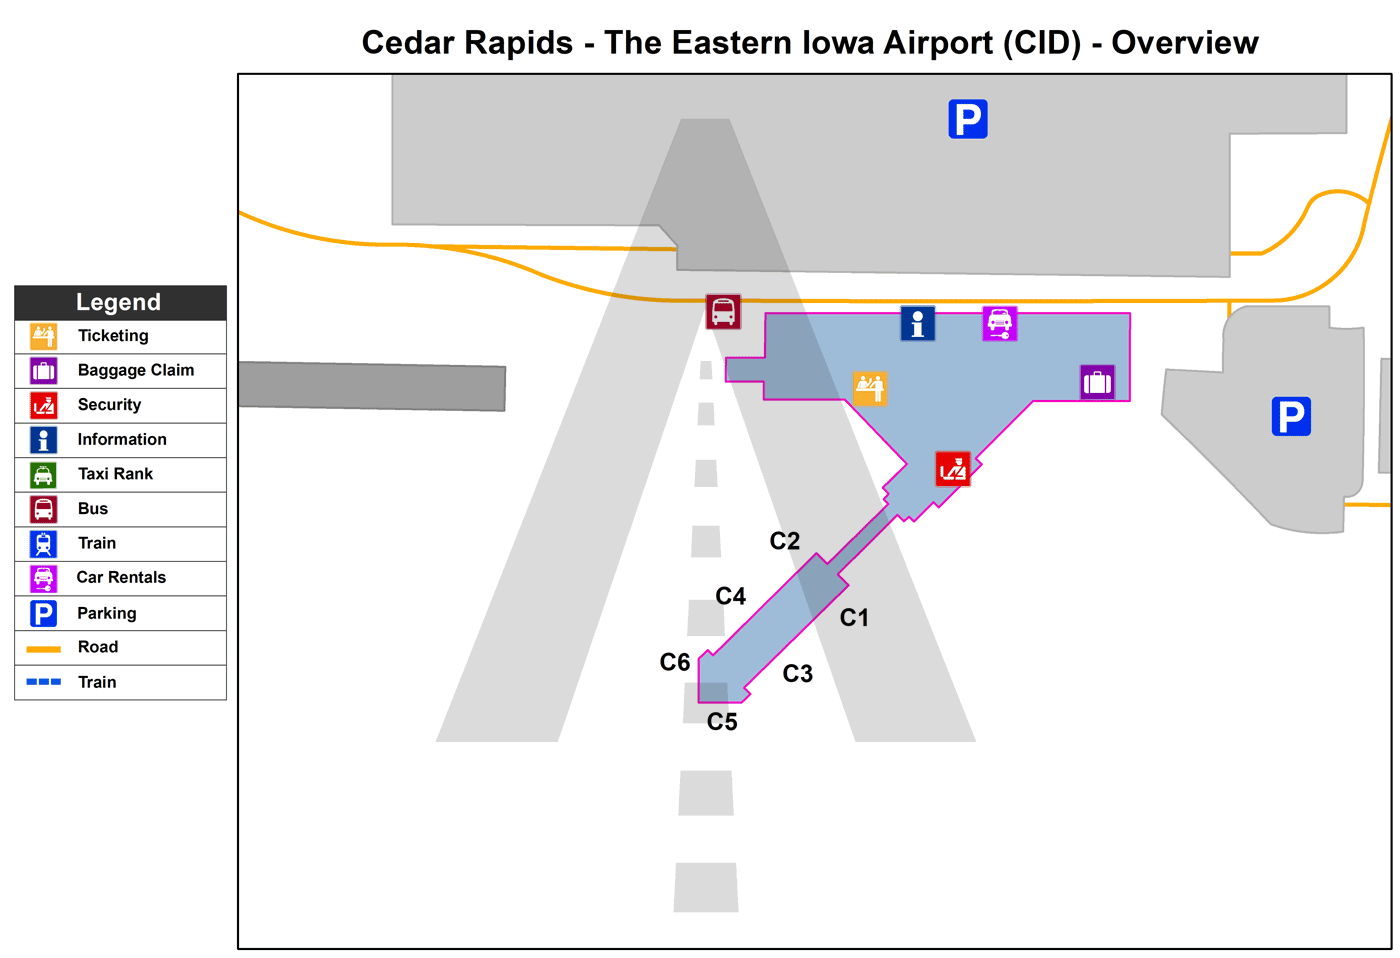 Eastern Iowa Airport